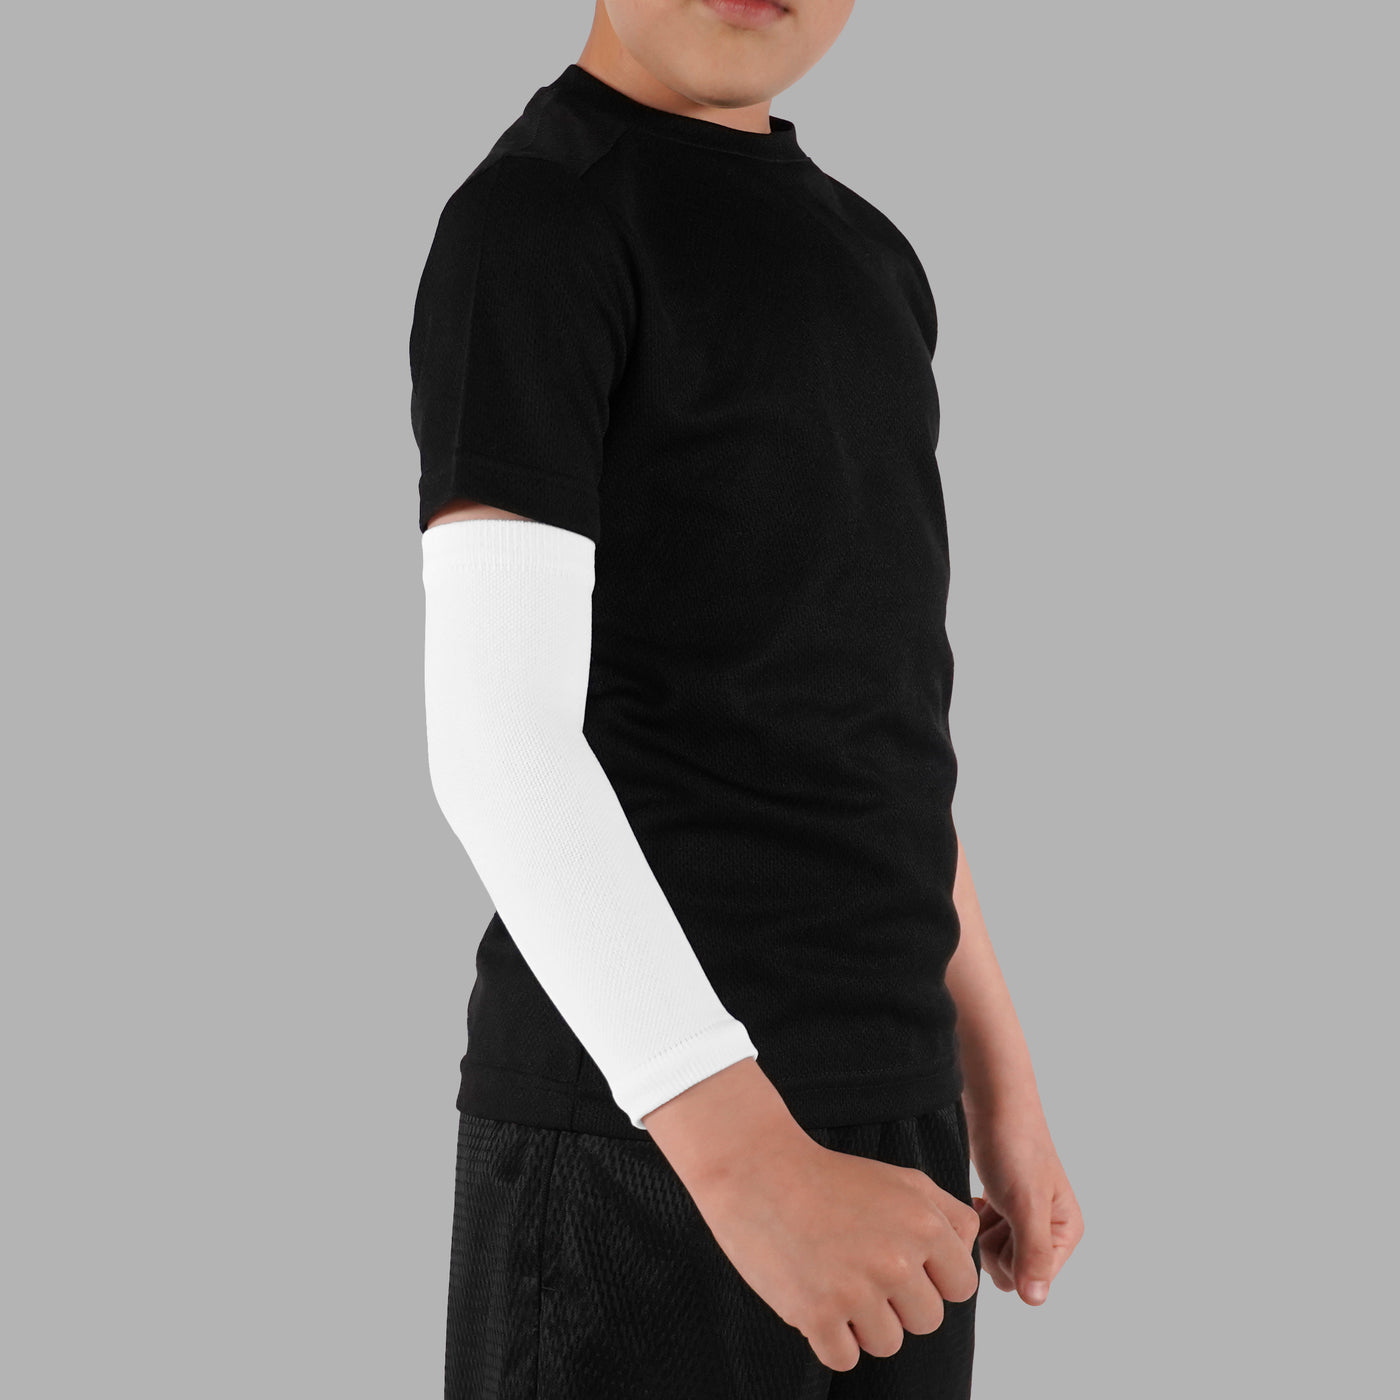 Basic White Kids Knitted Arm Sleeve